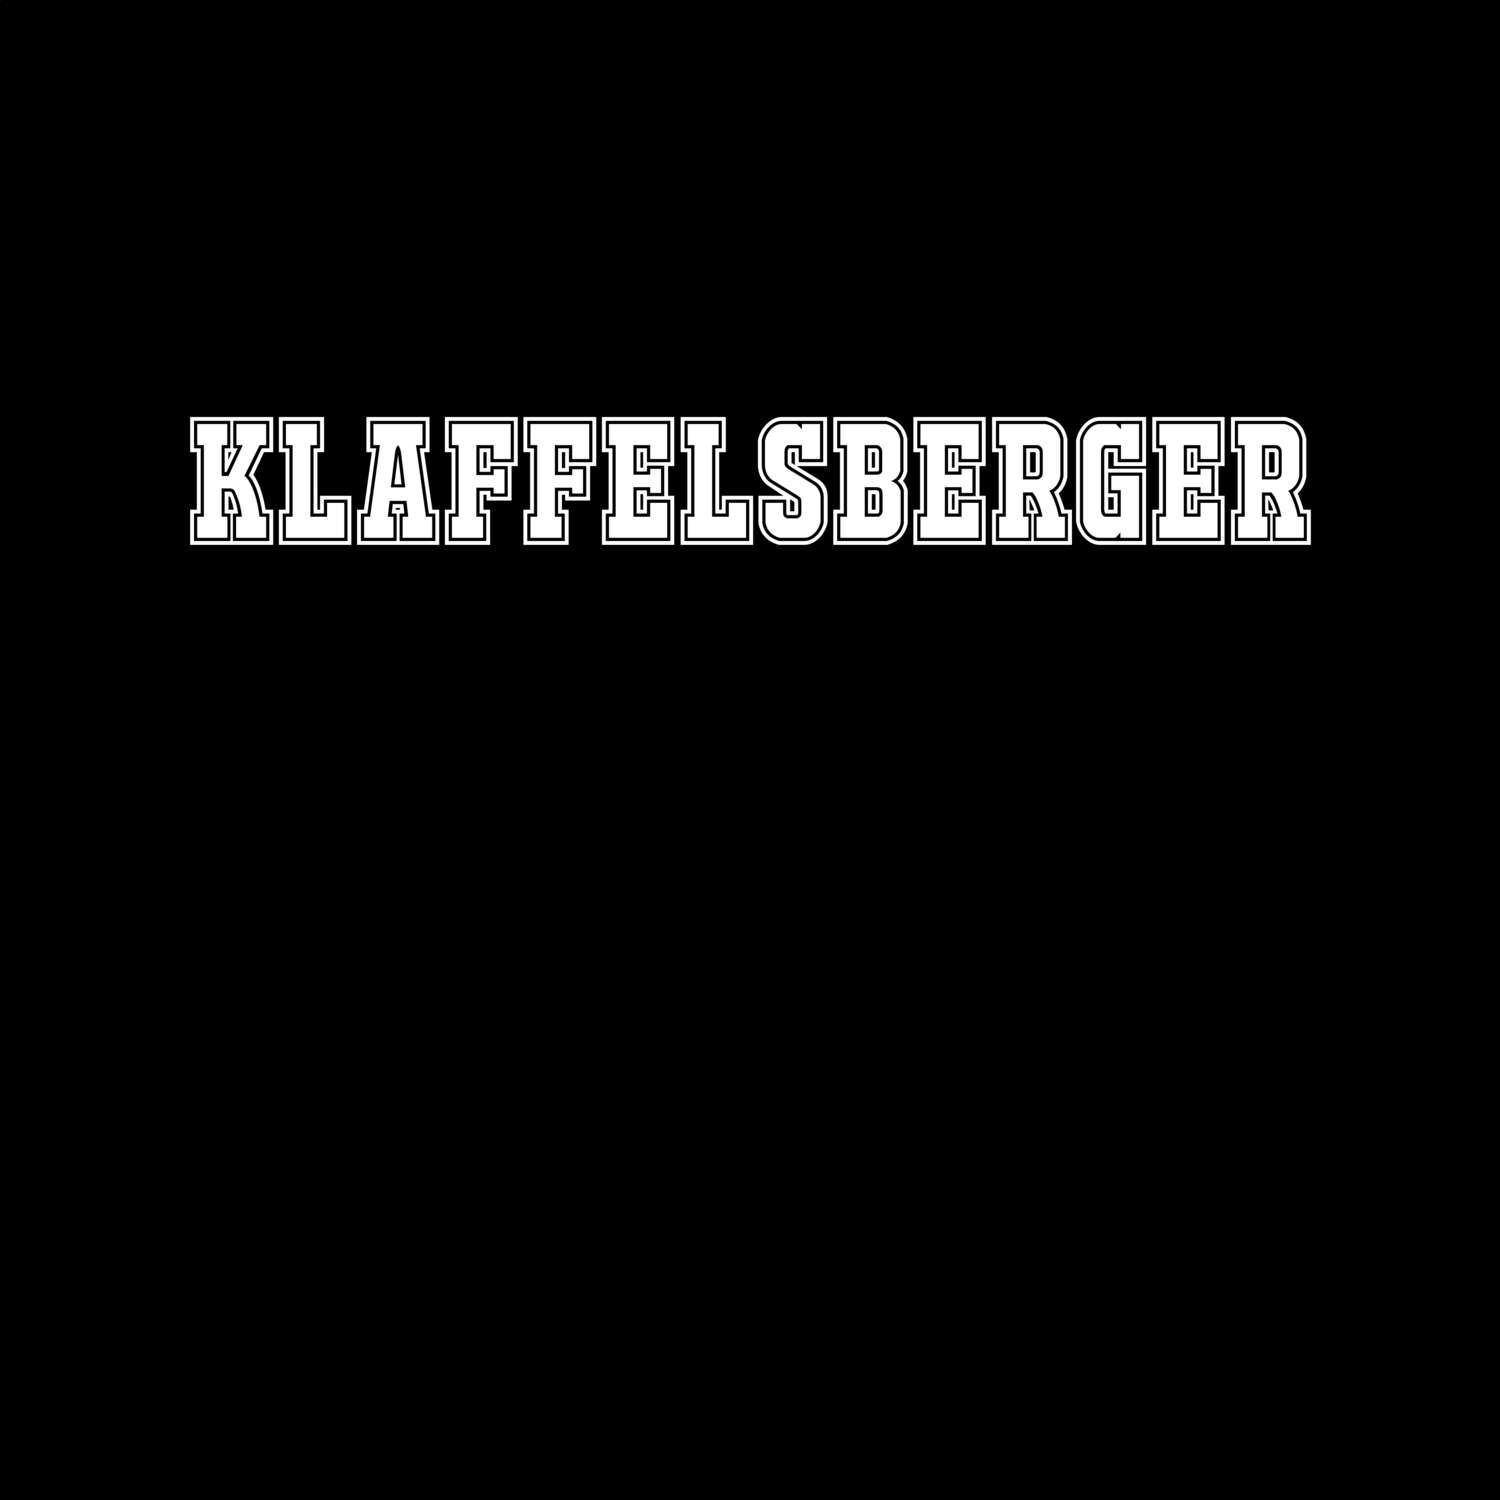 Klaffelsberger T-Shirt »Classic«